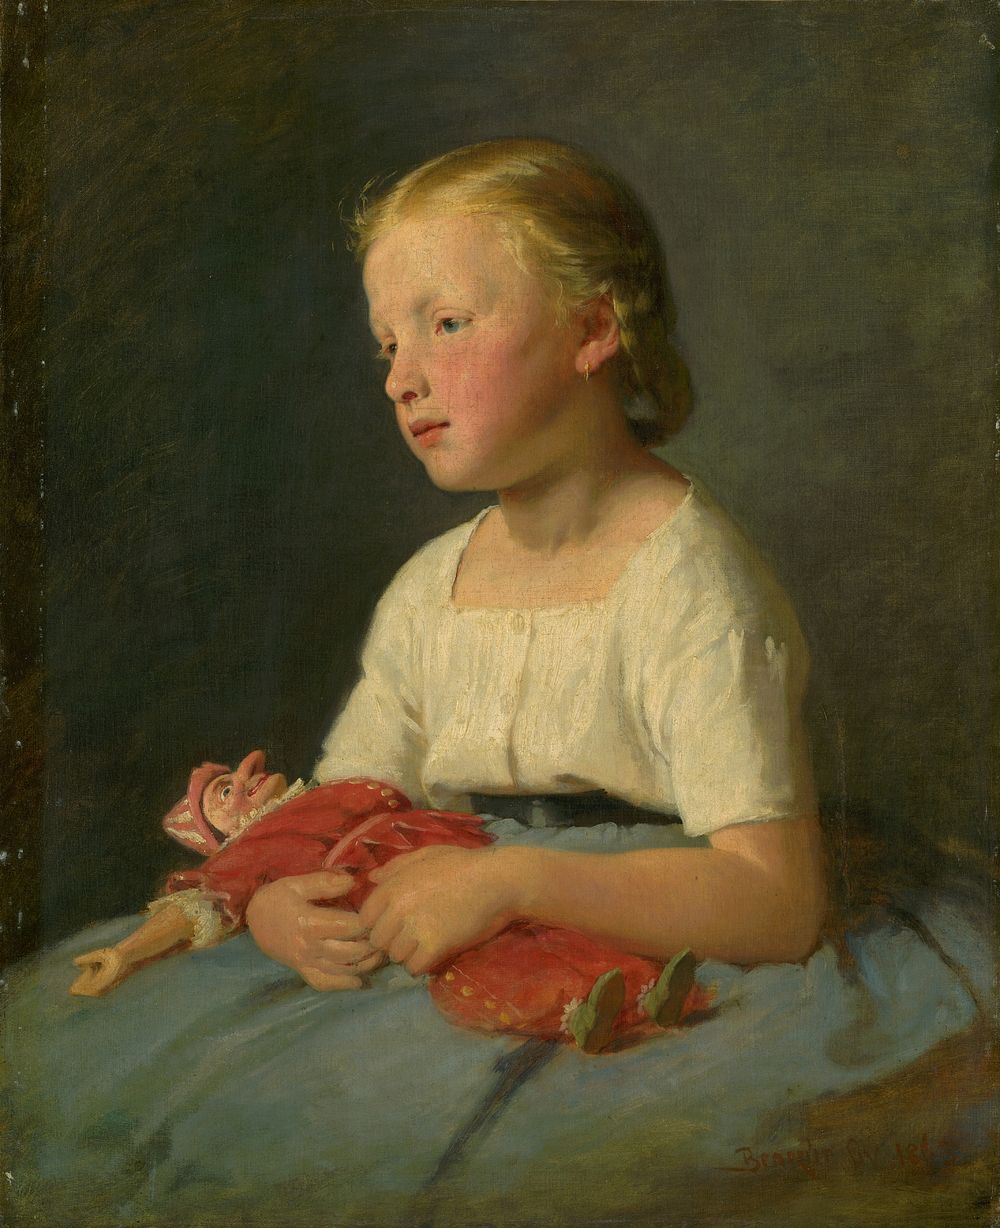 Little girl with a doll, Gyula Benczúr